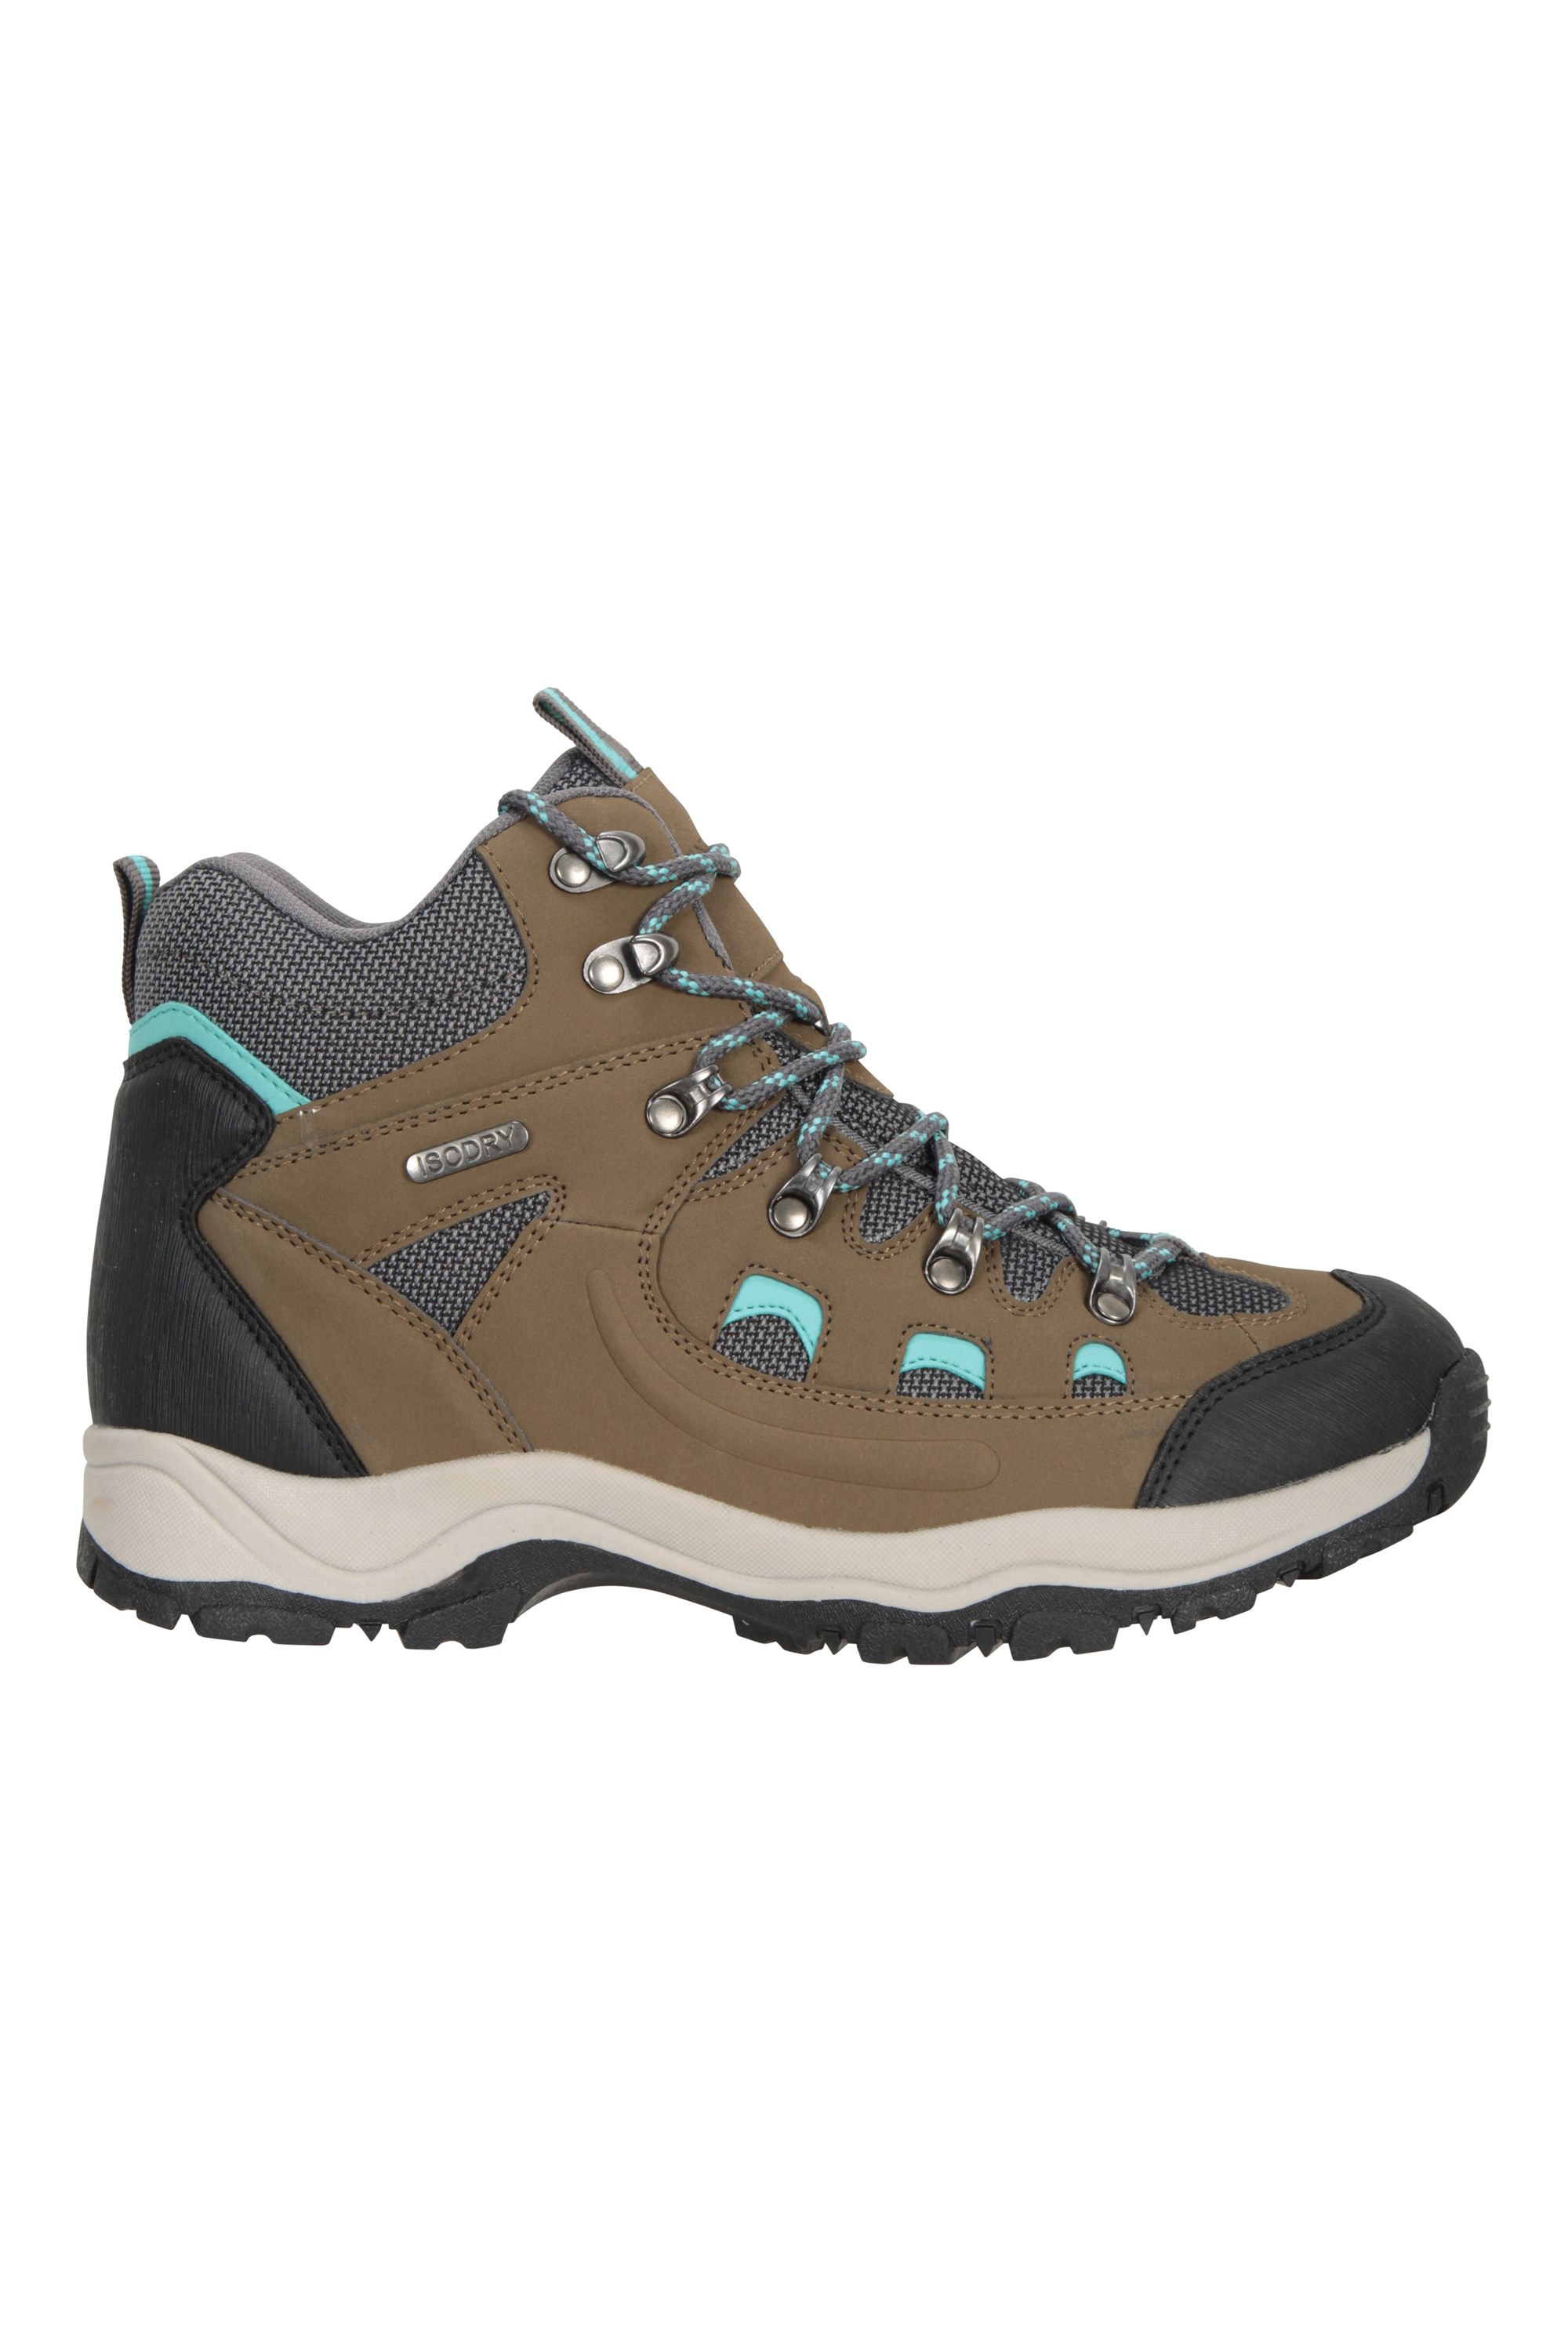 Adventurer Womens Waterproof Hiking Boots | Mountain Warehouse US